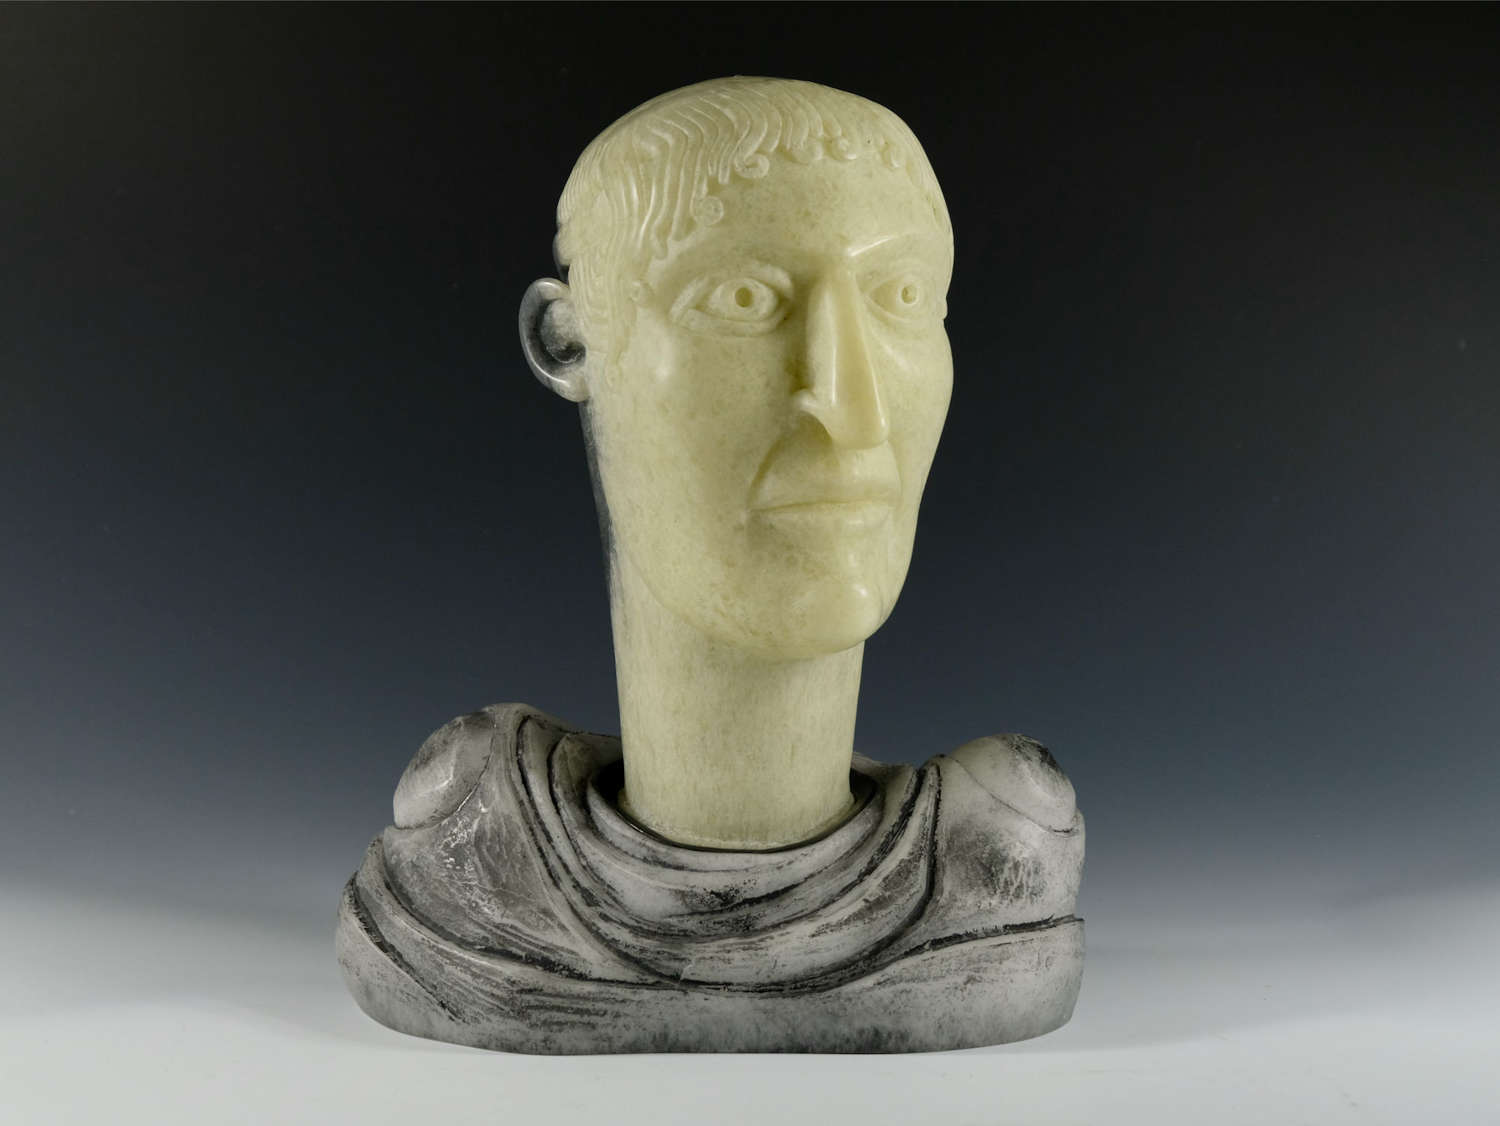 Greek Head II Cast Glass sculpture by David Reekie.